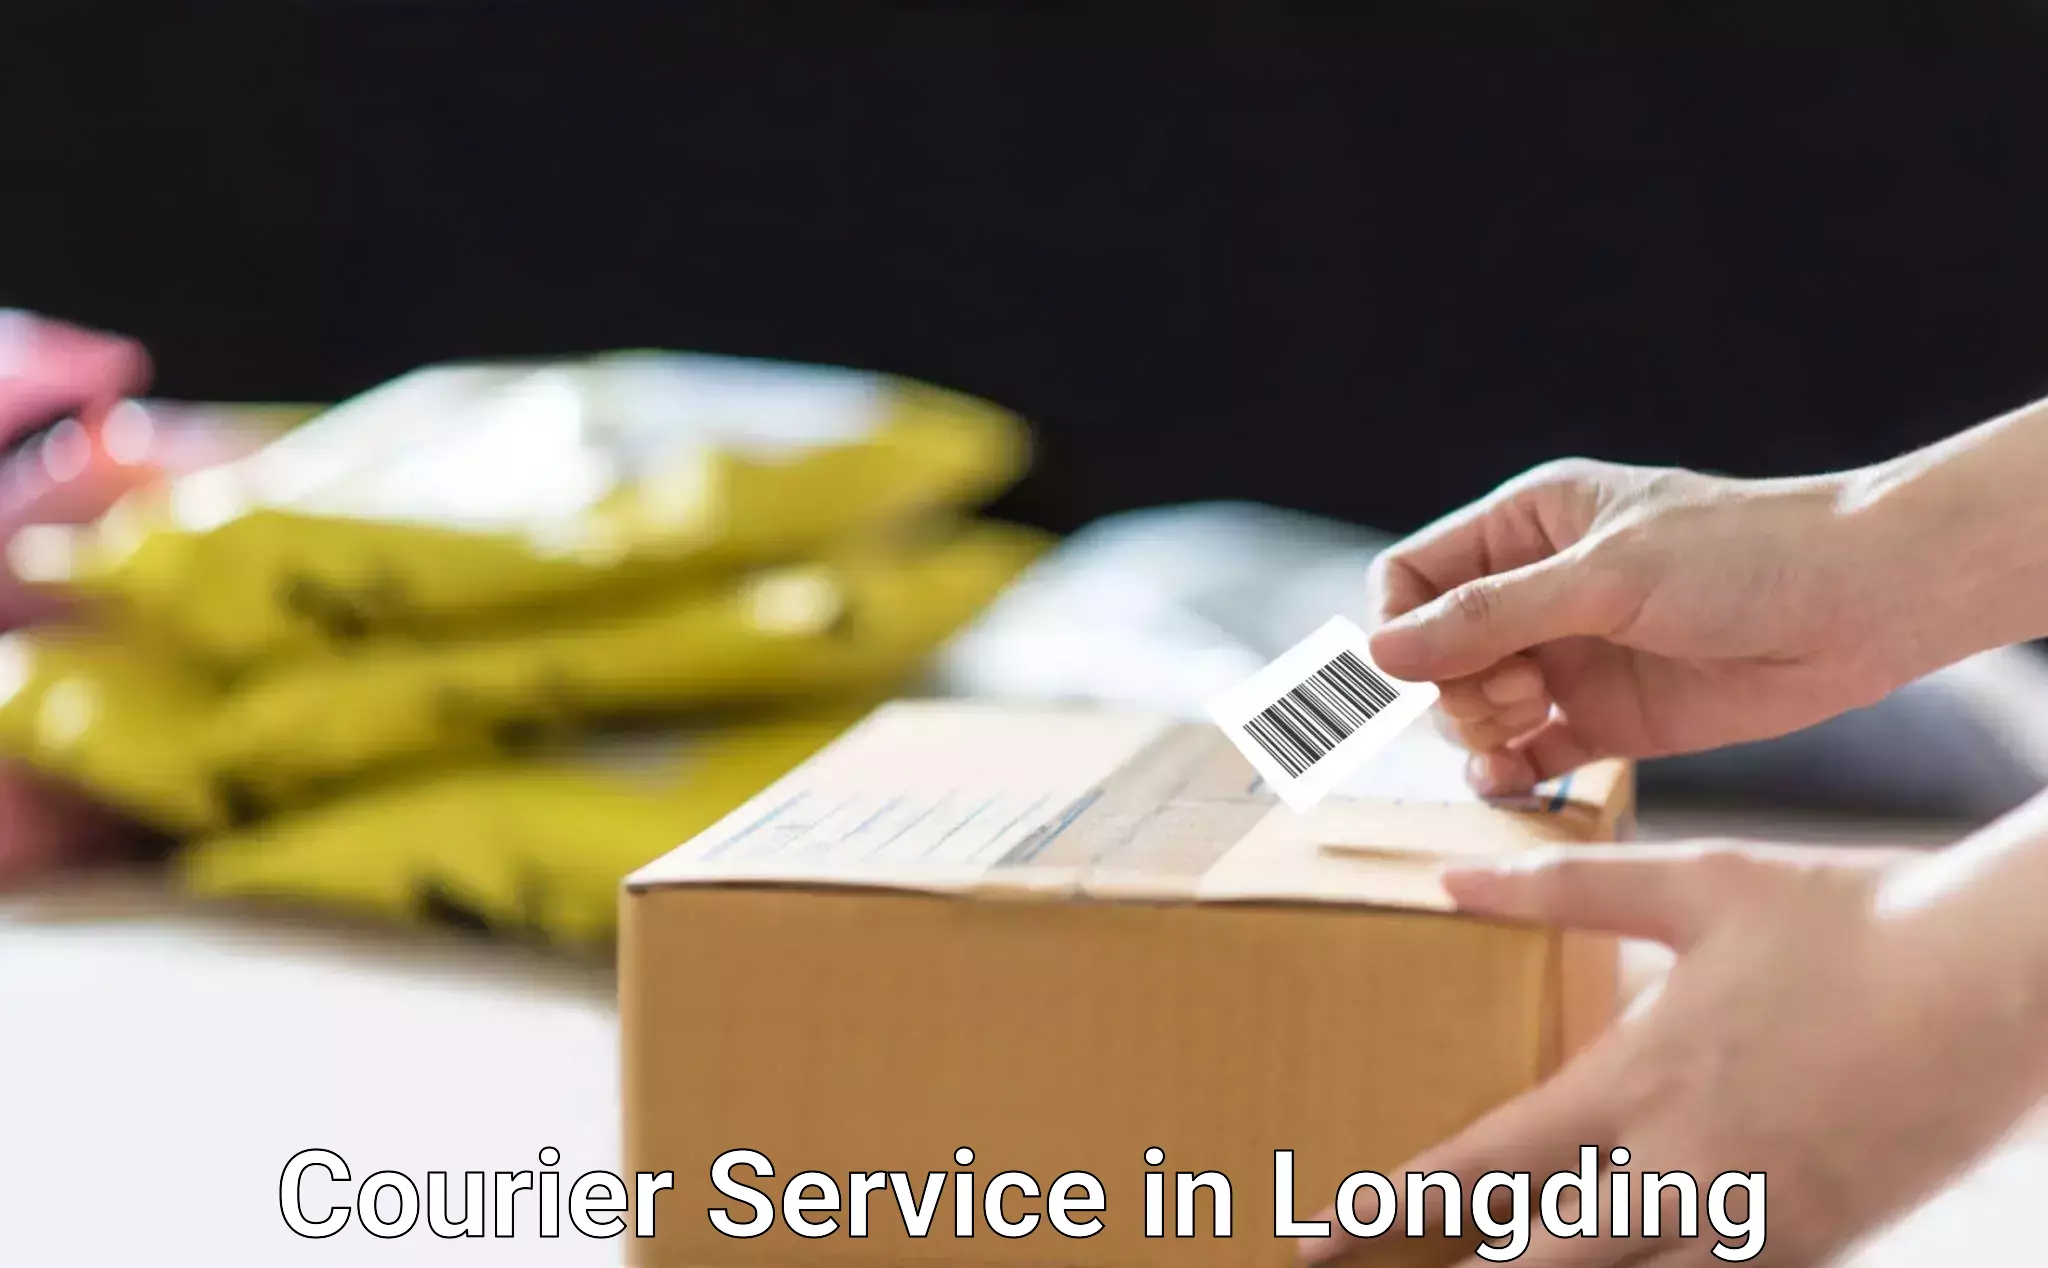 Flexible parcel services in Longding